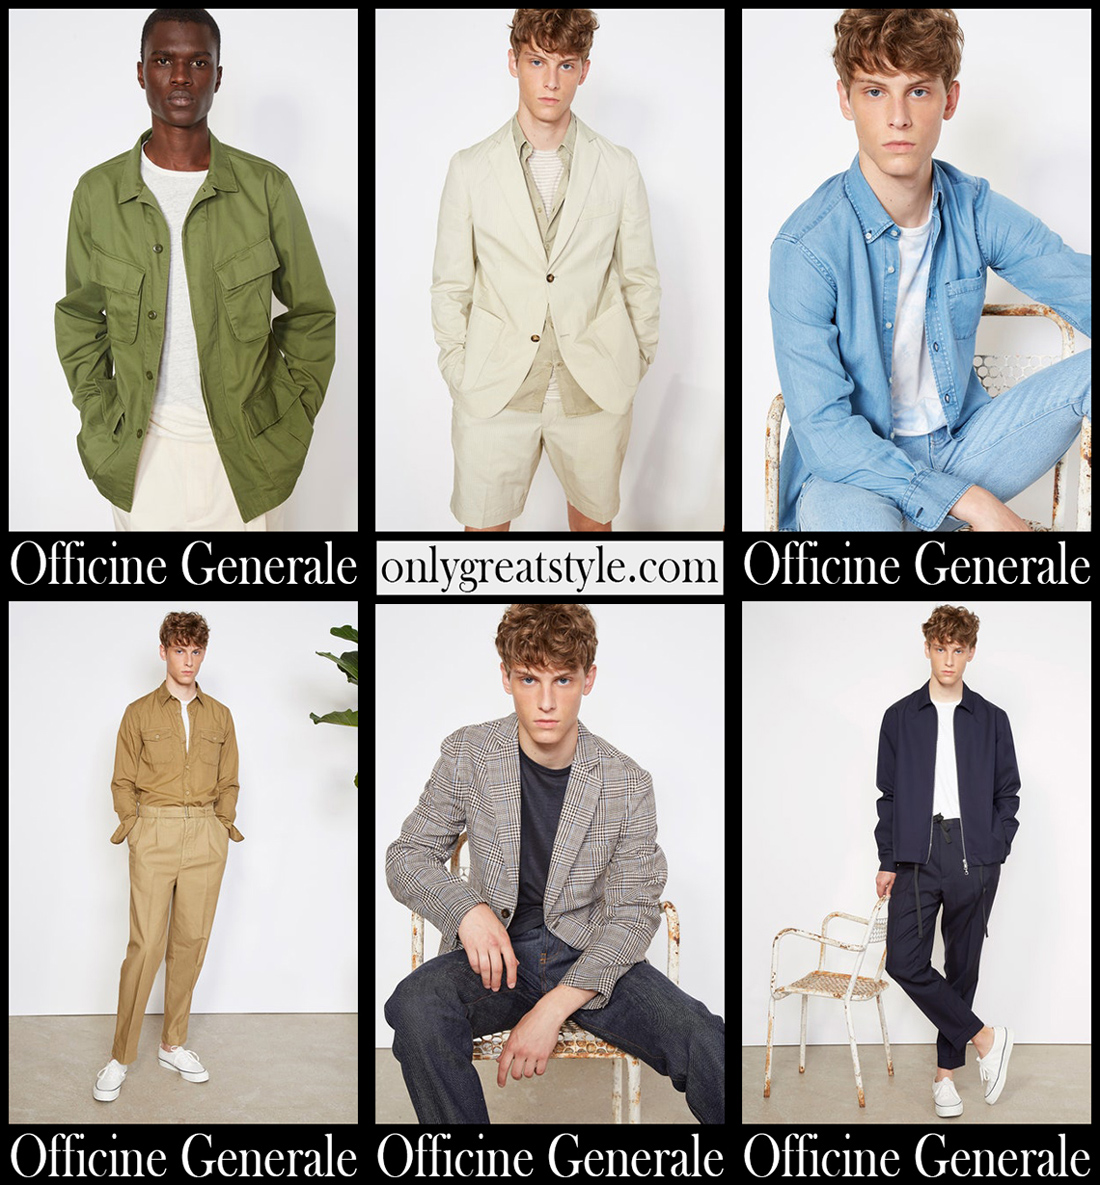 Fashion Officine Generale 2021 menswear spring summer